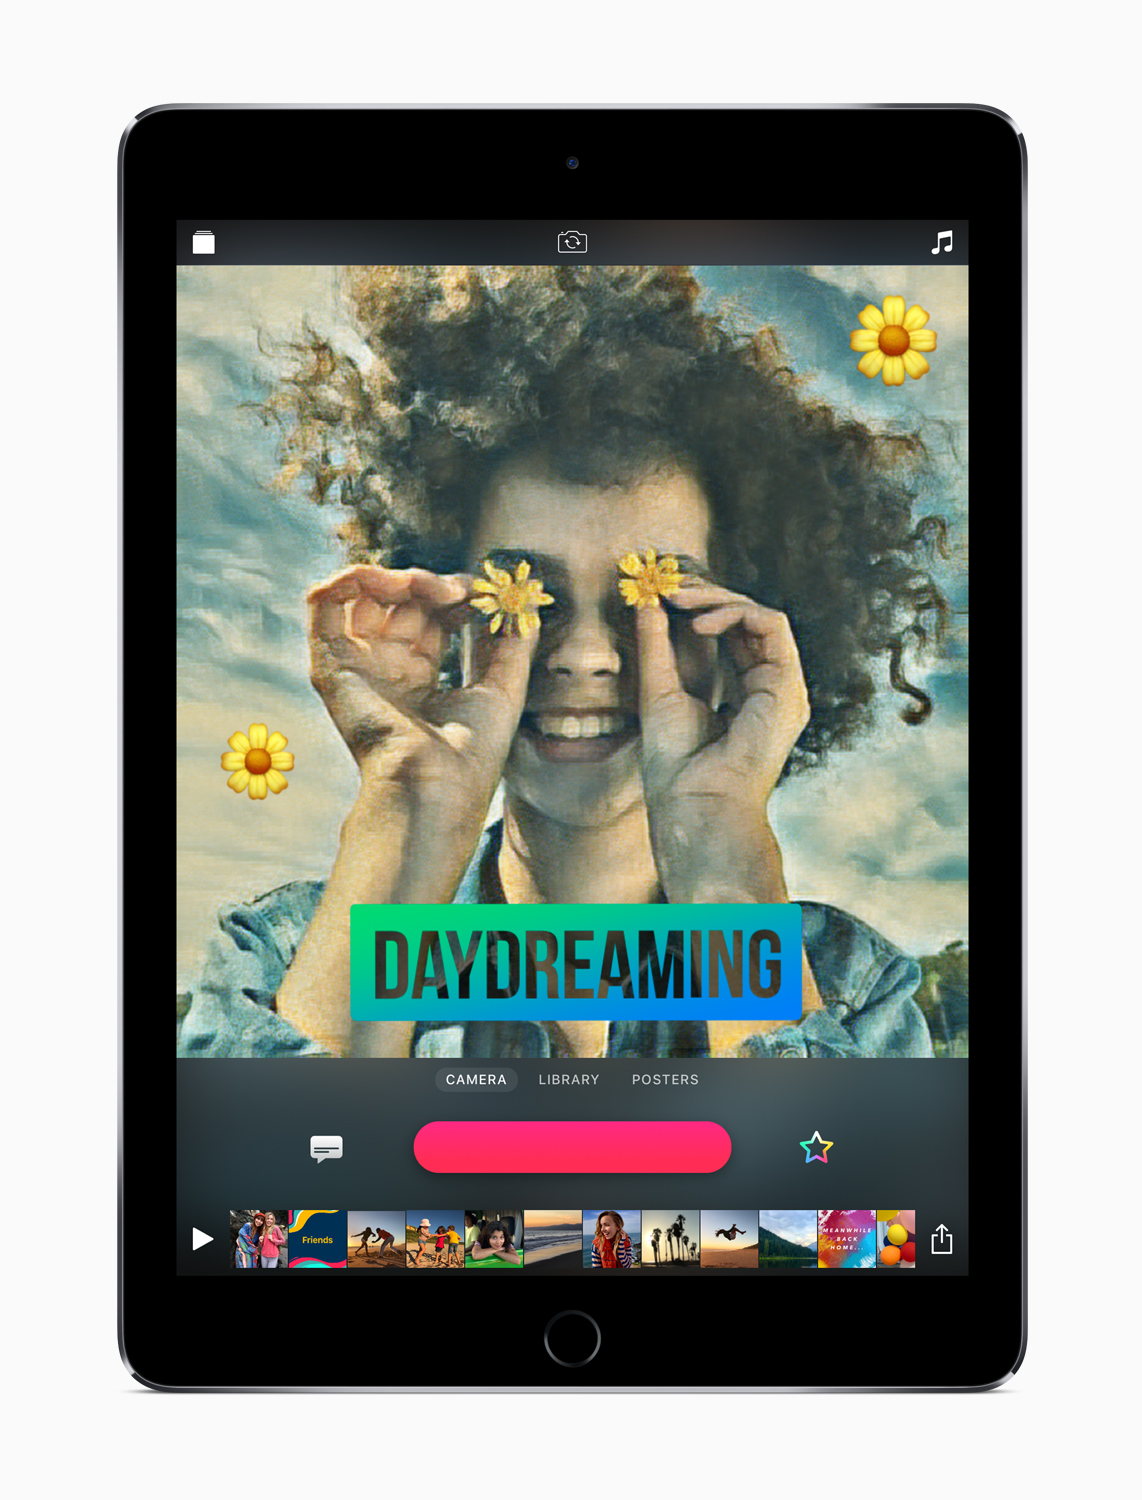 iPad_9_7_daydreaming_filter_screen_20171109